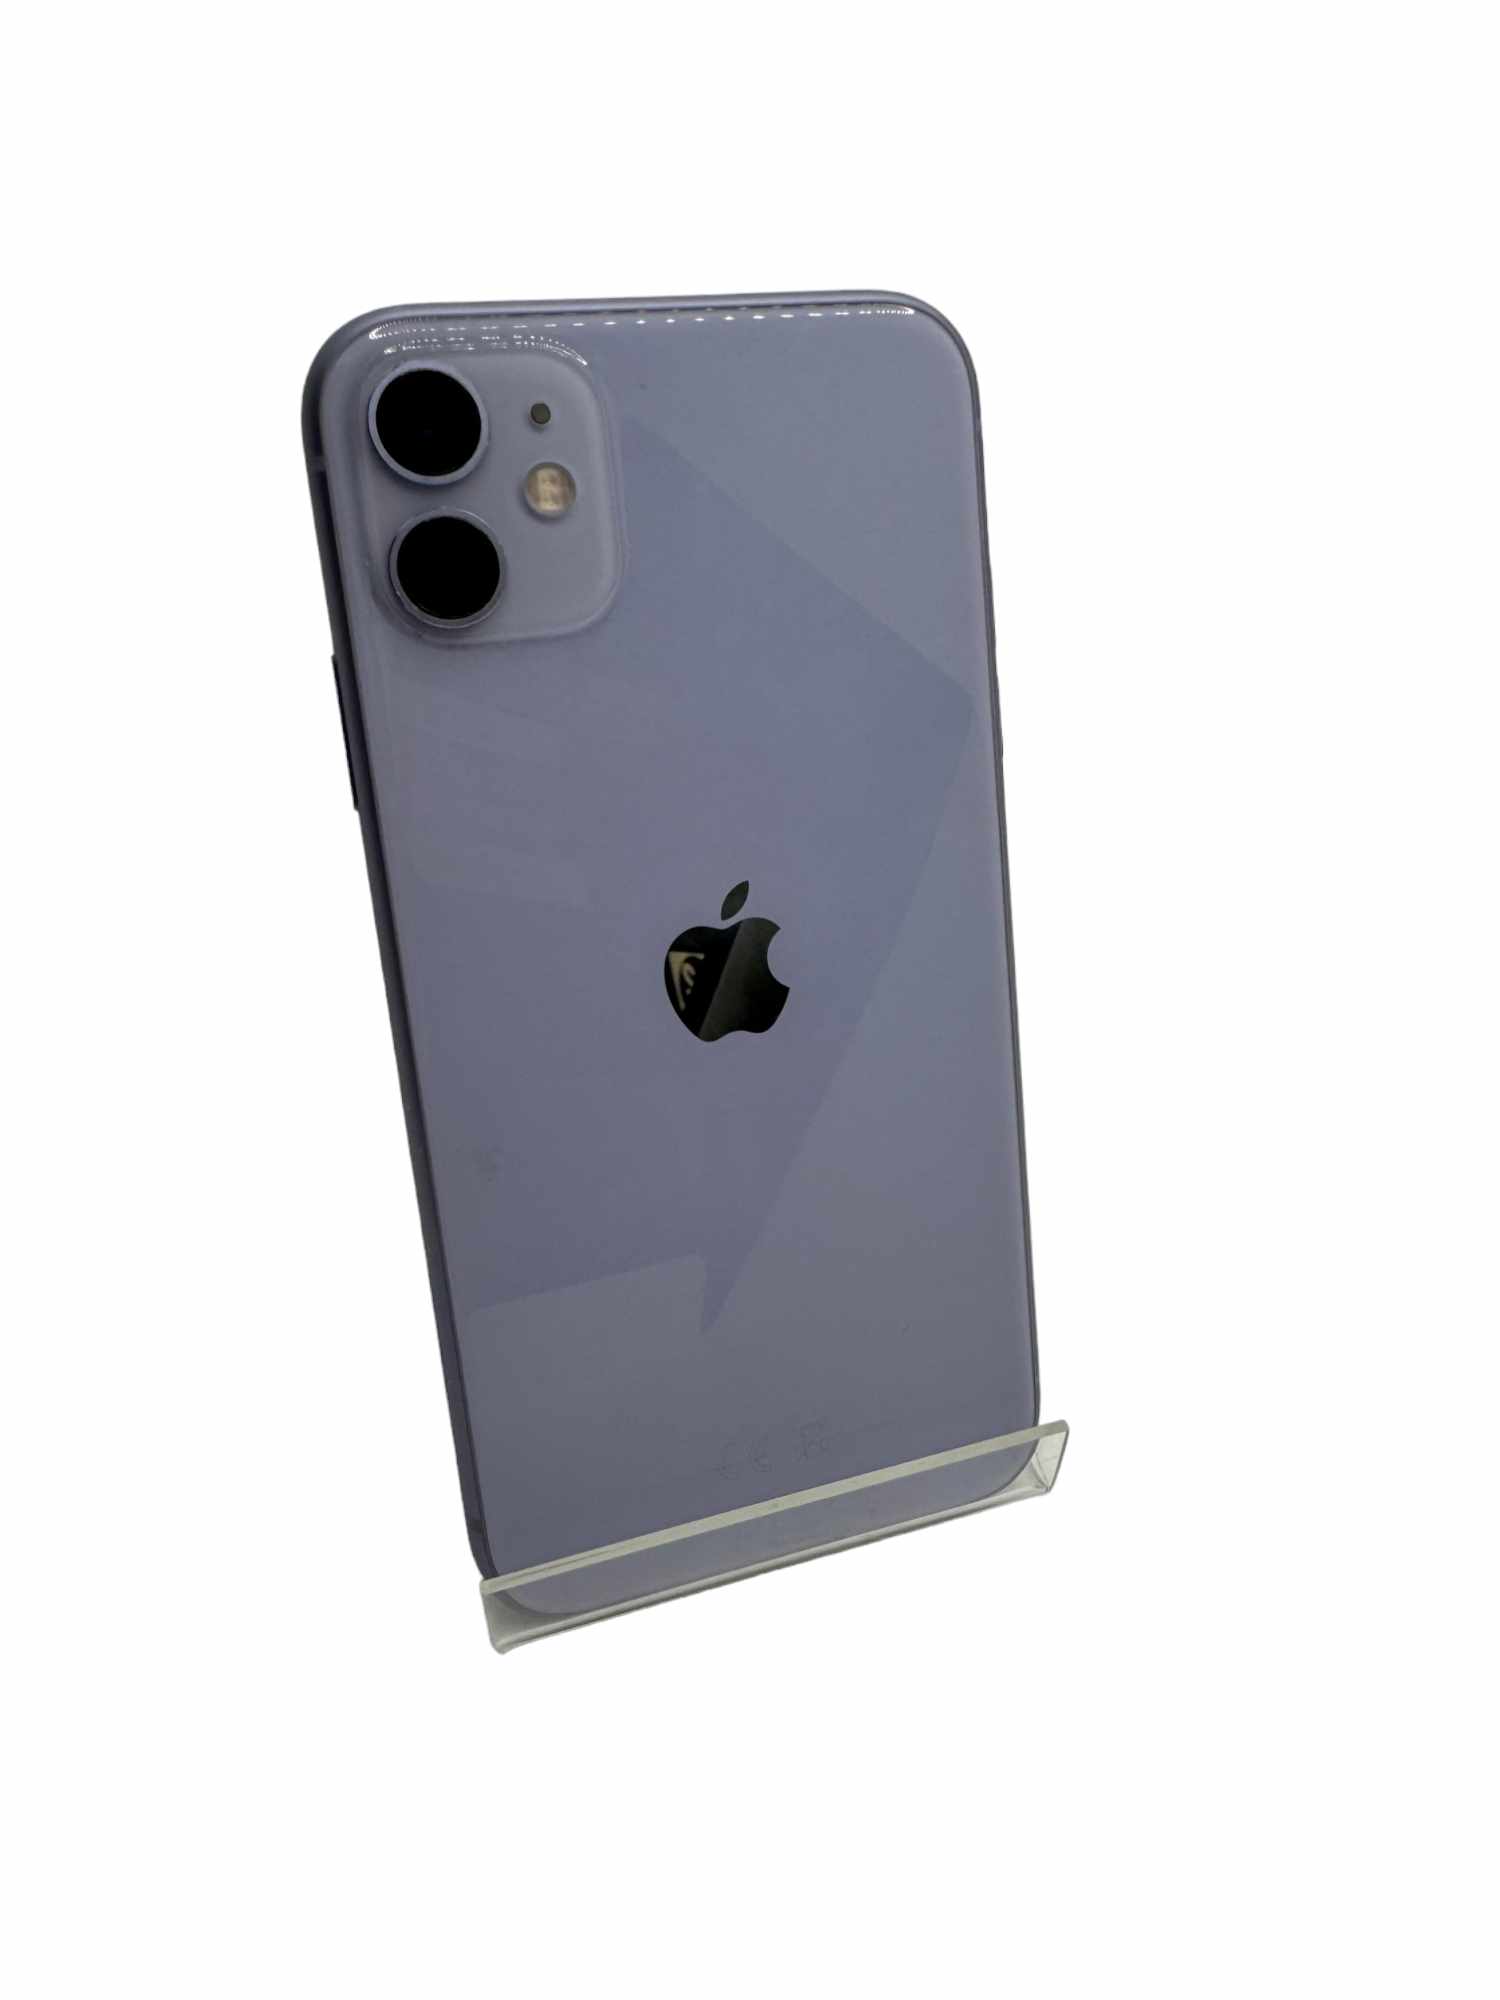 iPhone 11 Purple 64GB Unlocked 86% Battery Health Display Changed